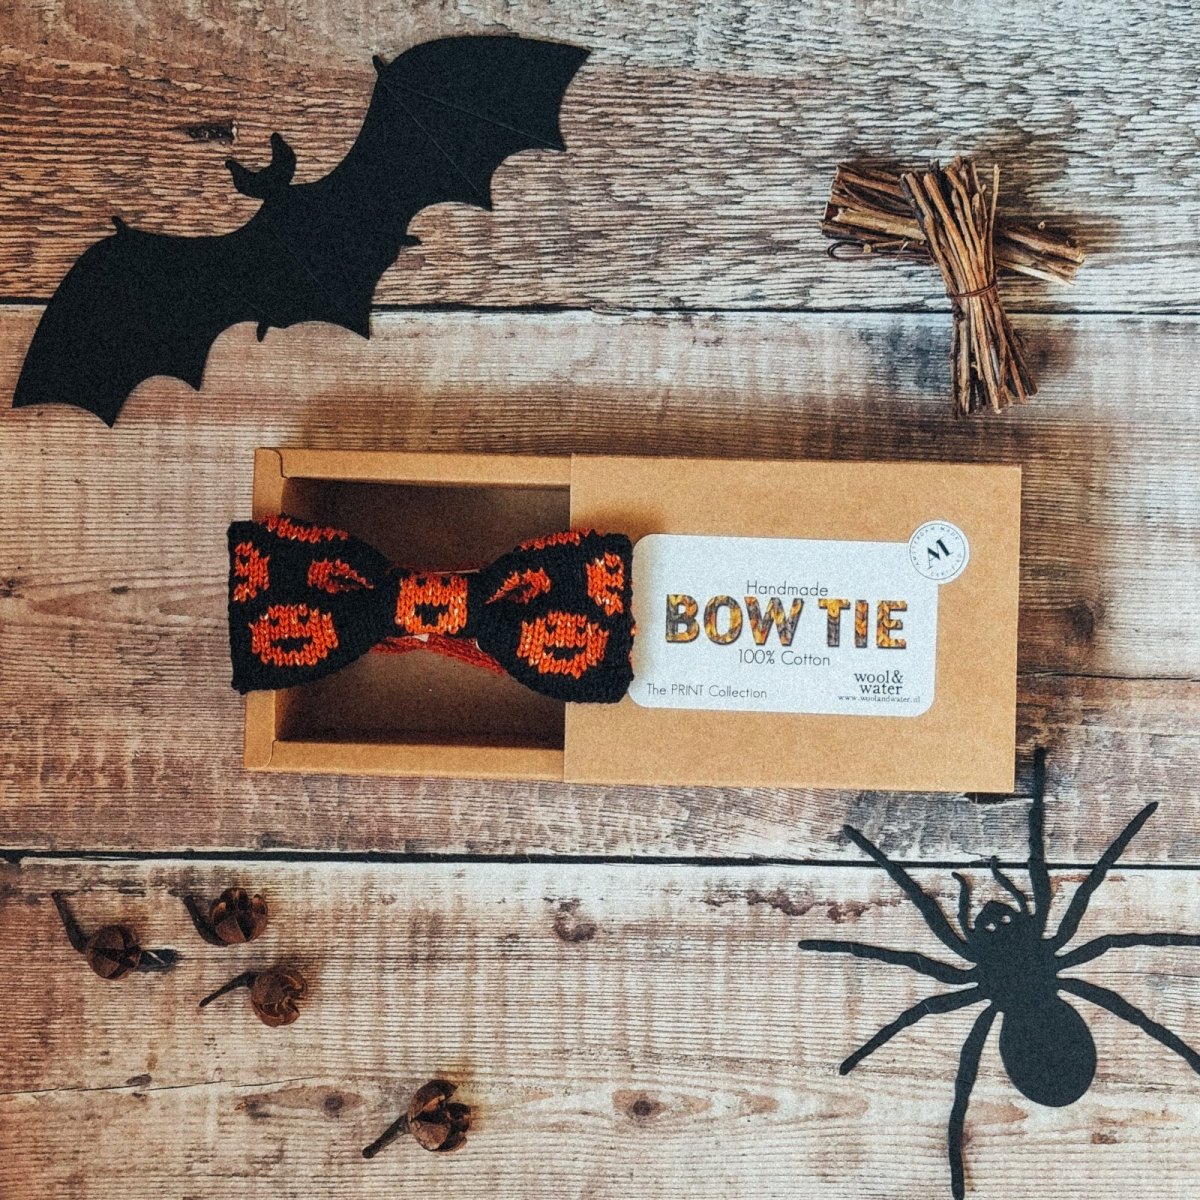 Halloween Bow Tie: Spooky Pumpkins - Wool & Water